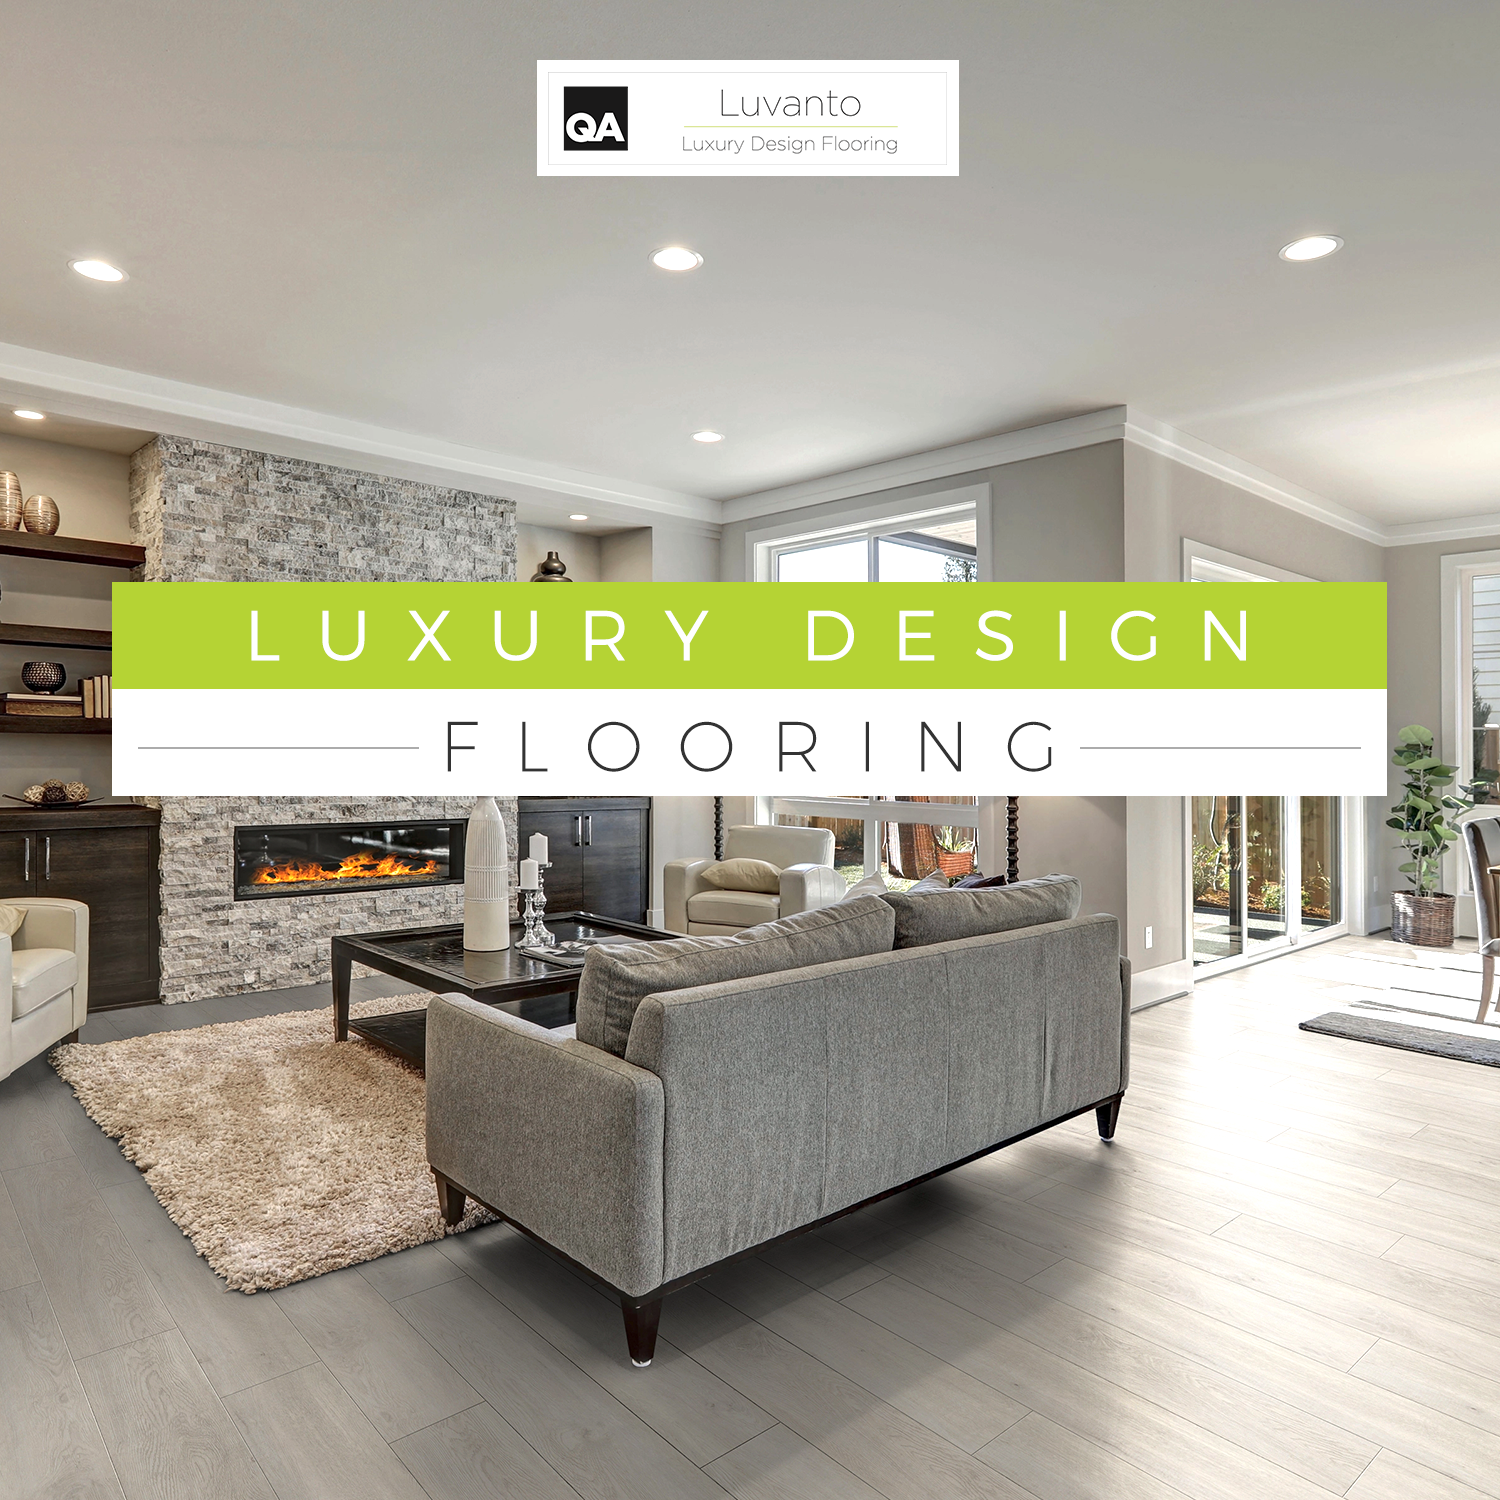 Luxury Design Flooring Luvanto Luxury Design Flooring - codes l cach lấy robux miễn phi 2020 l claim gg l roblox youtube